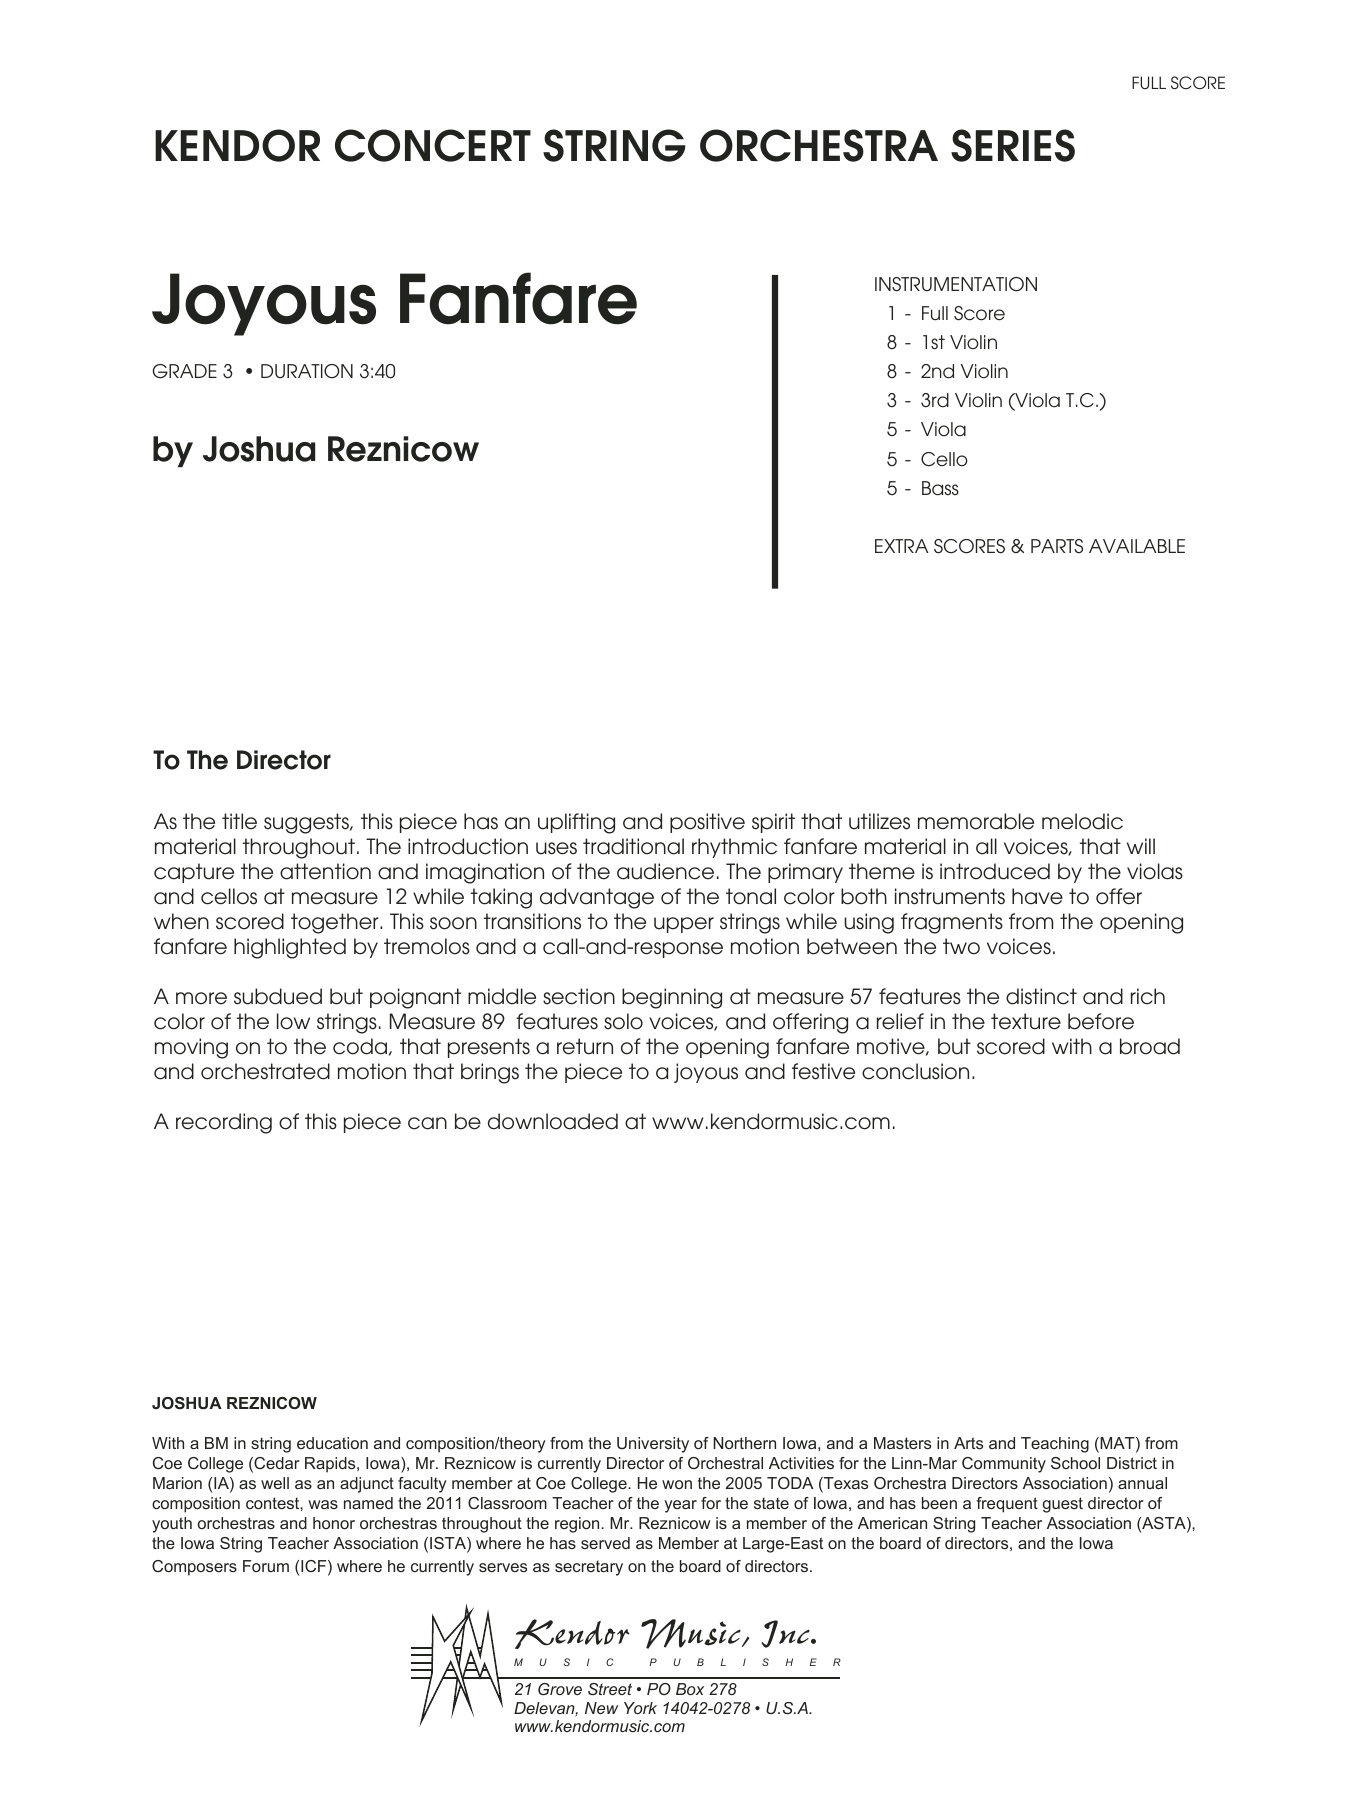 Download Joshua Reznicow Joyous Fanfare - Full Score Sheet Music